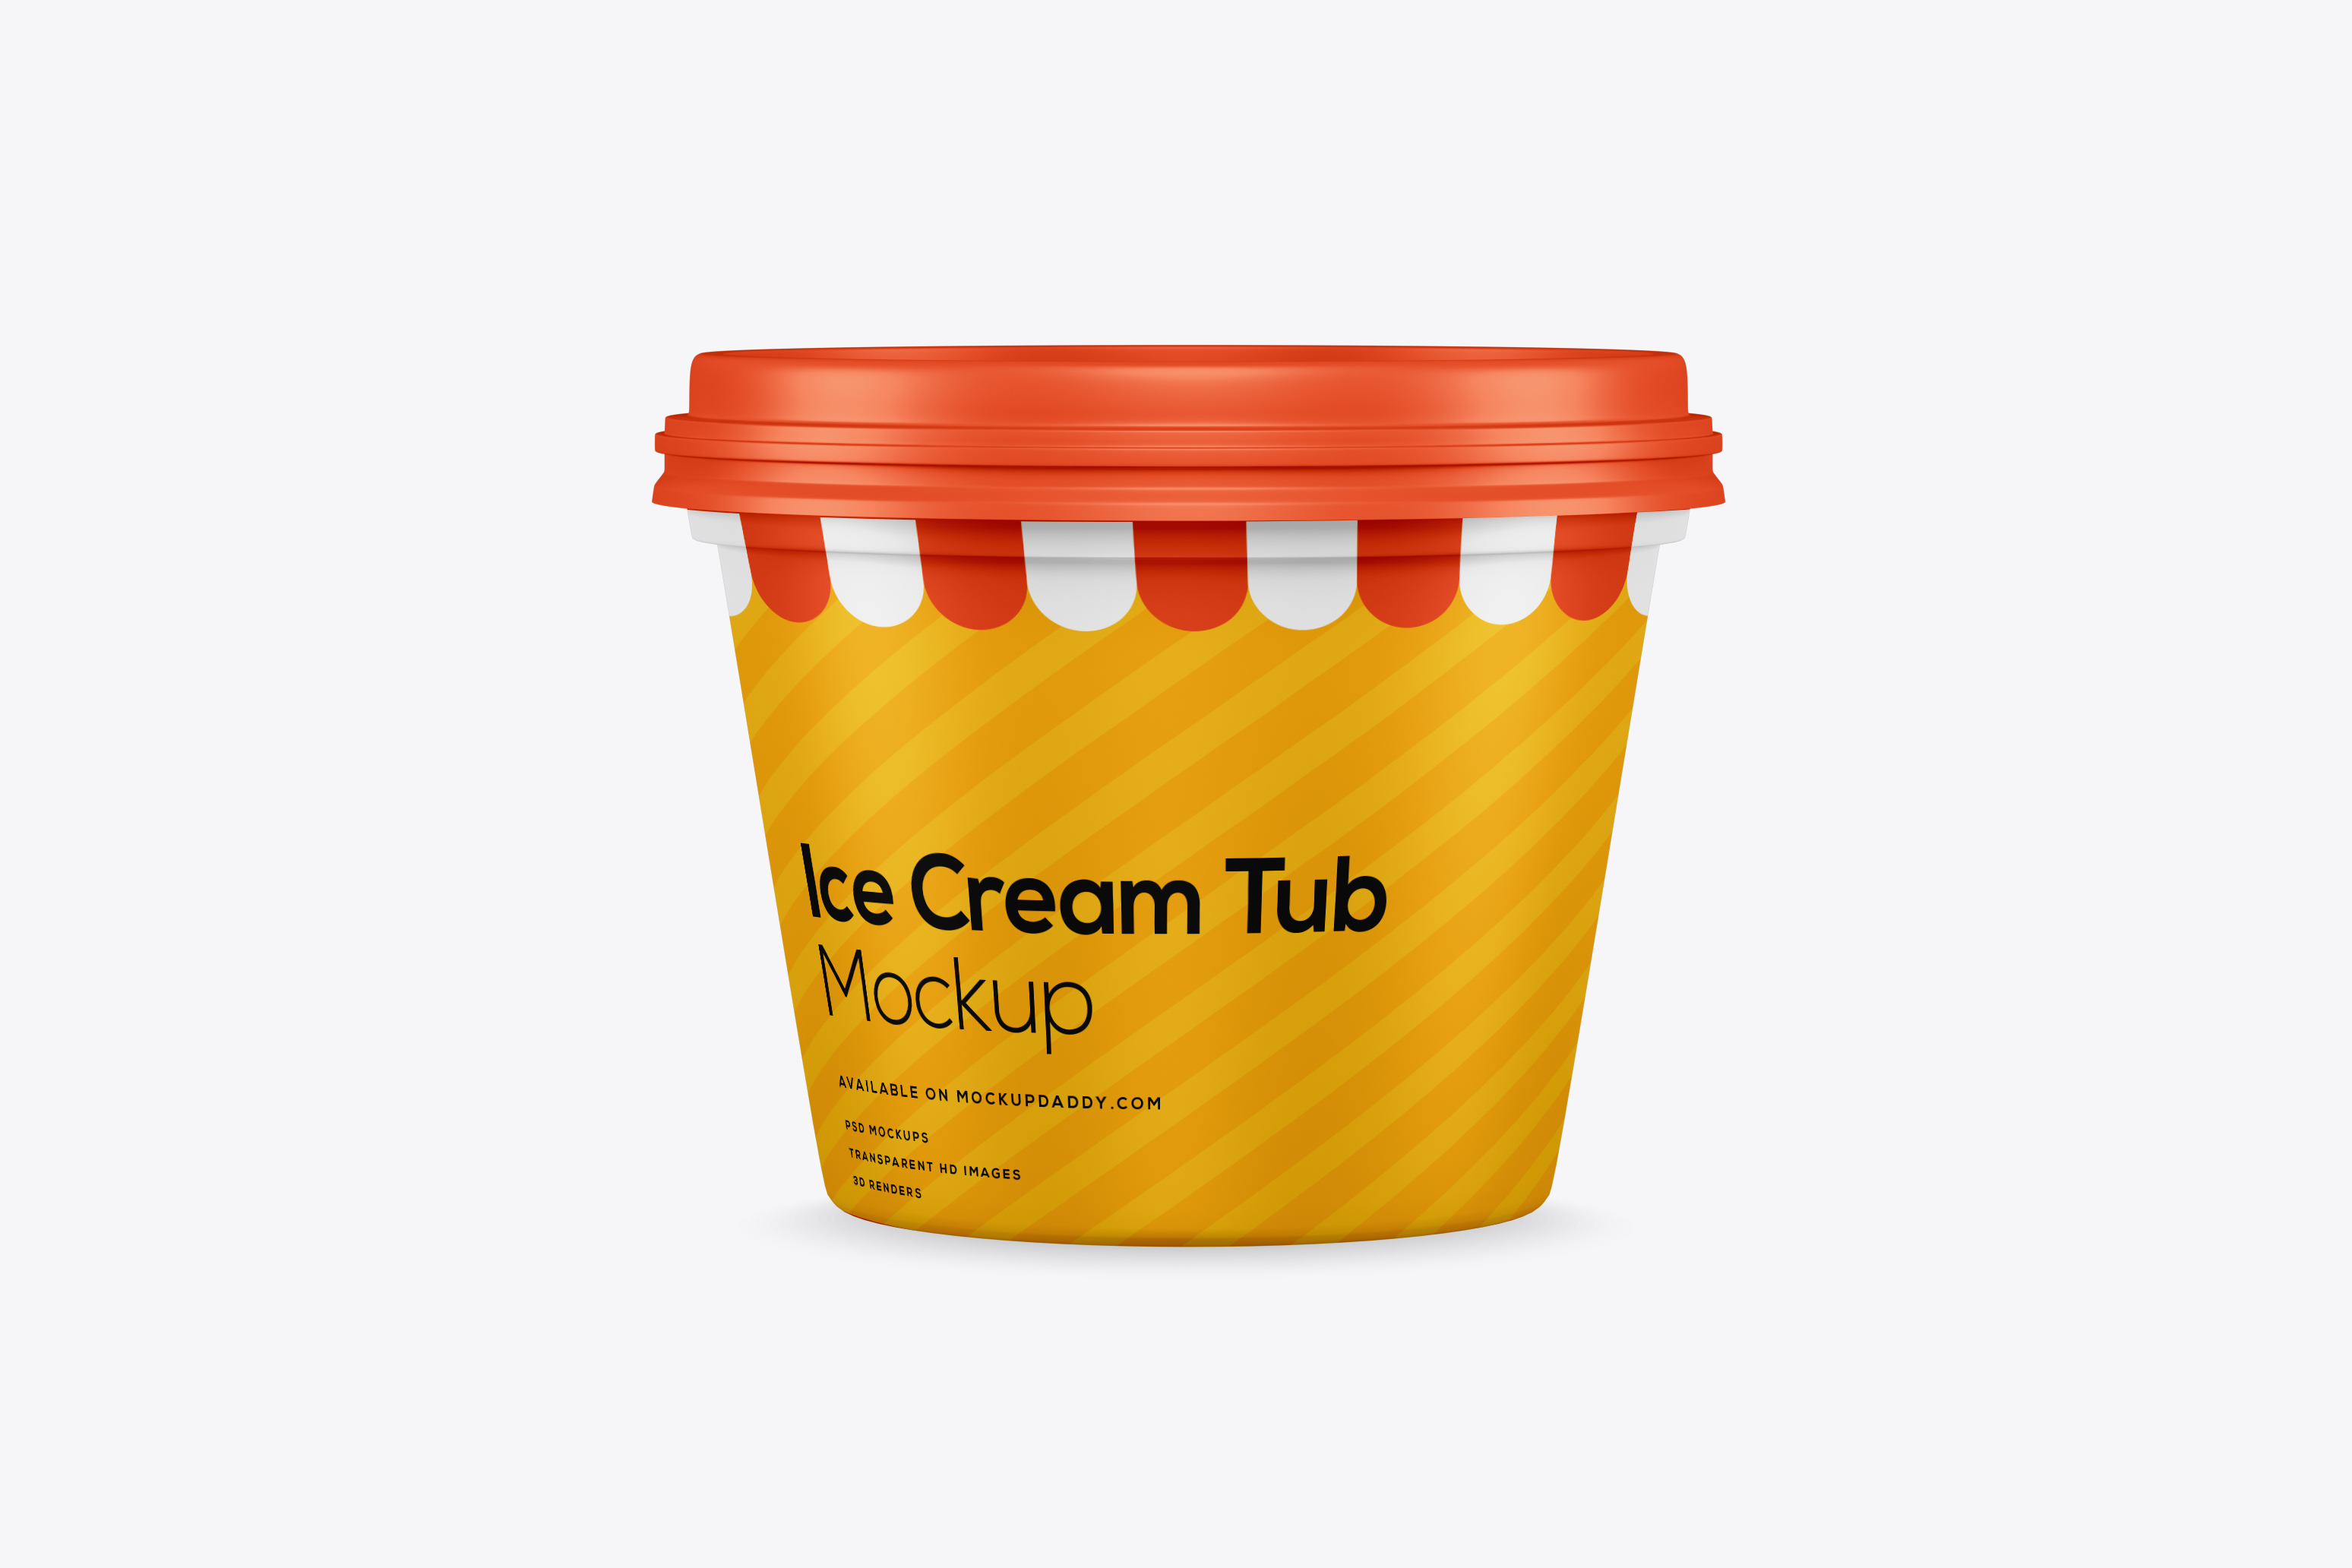 Orange-lidded ice cream tub mockup in PSD with black text.